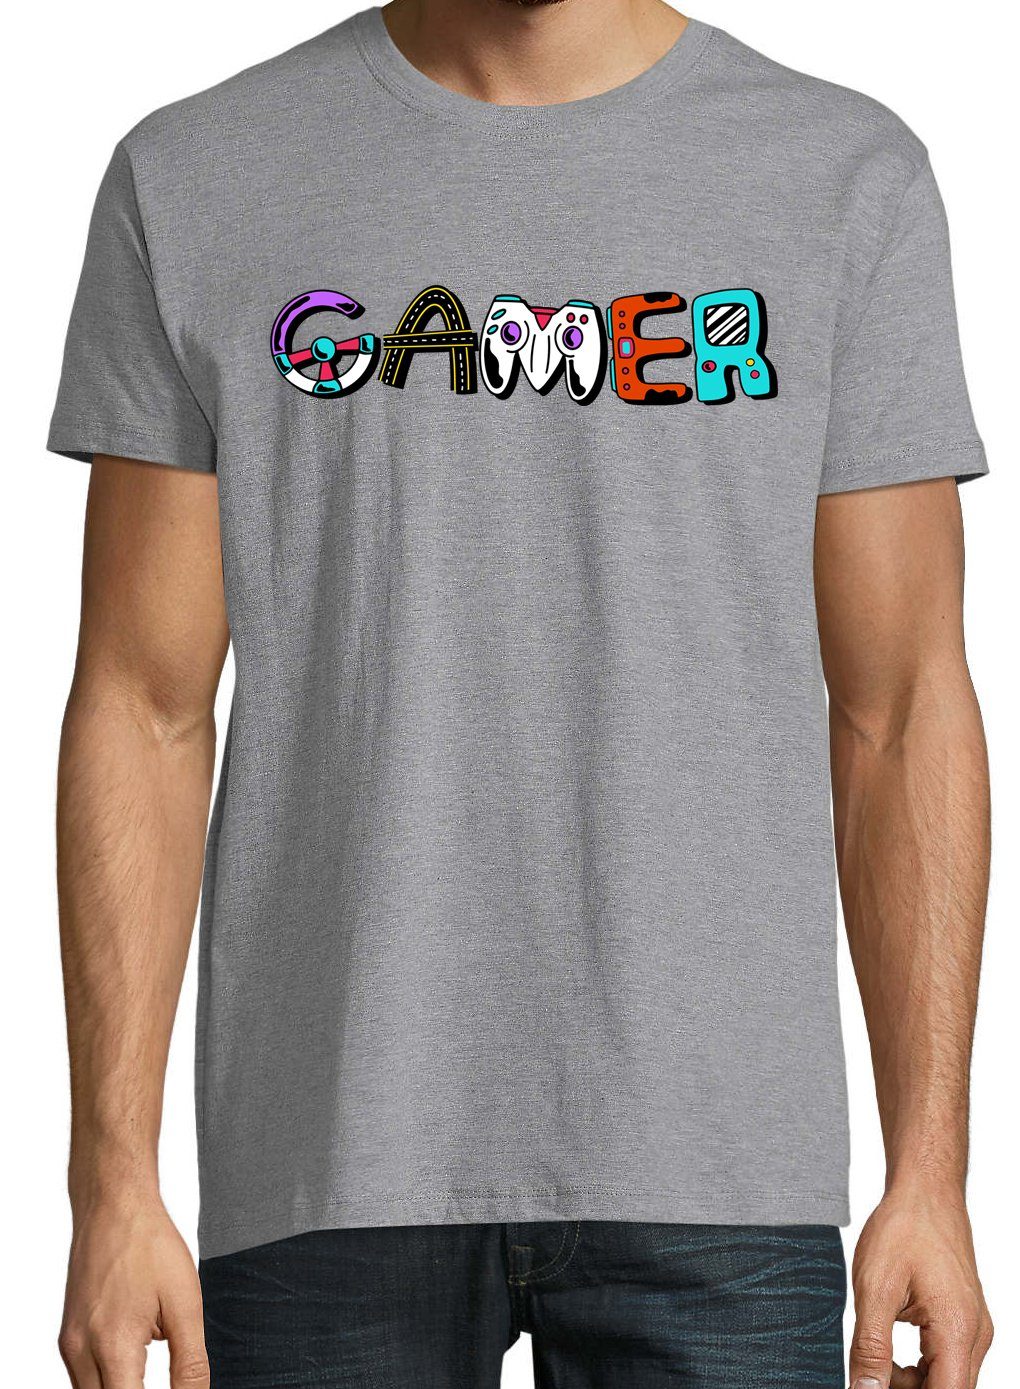 Grau trendigem Herren T-Shirt Designz mit Shirt Gamer Frontprint Youth